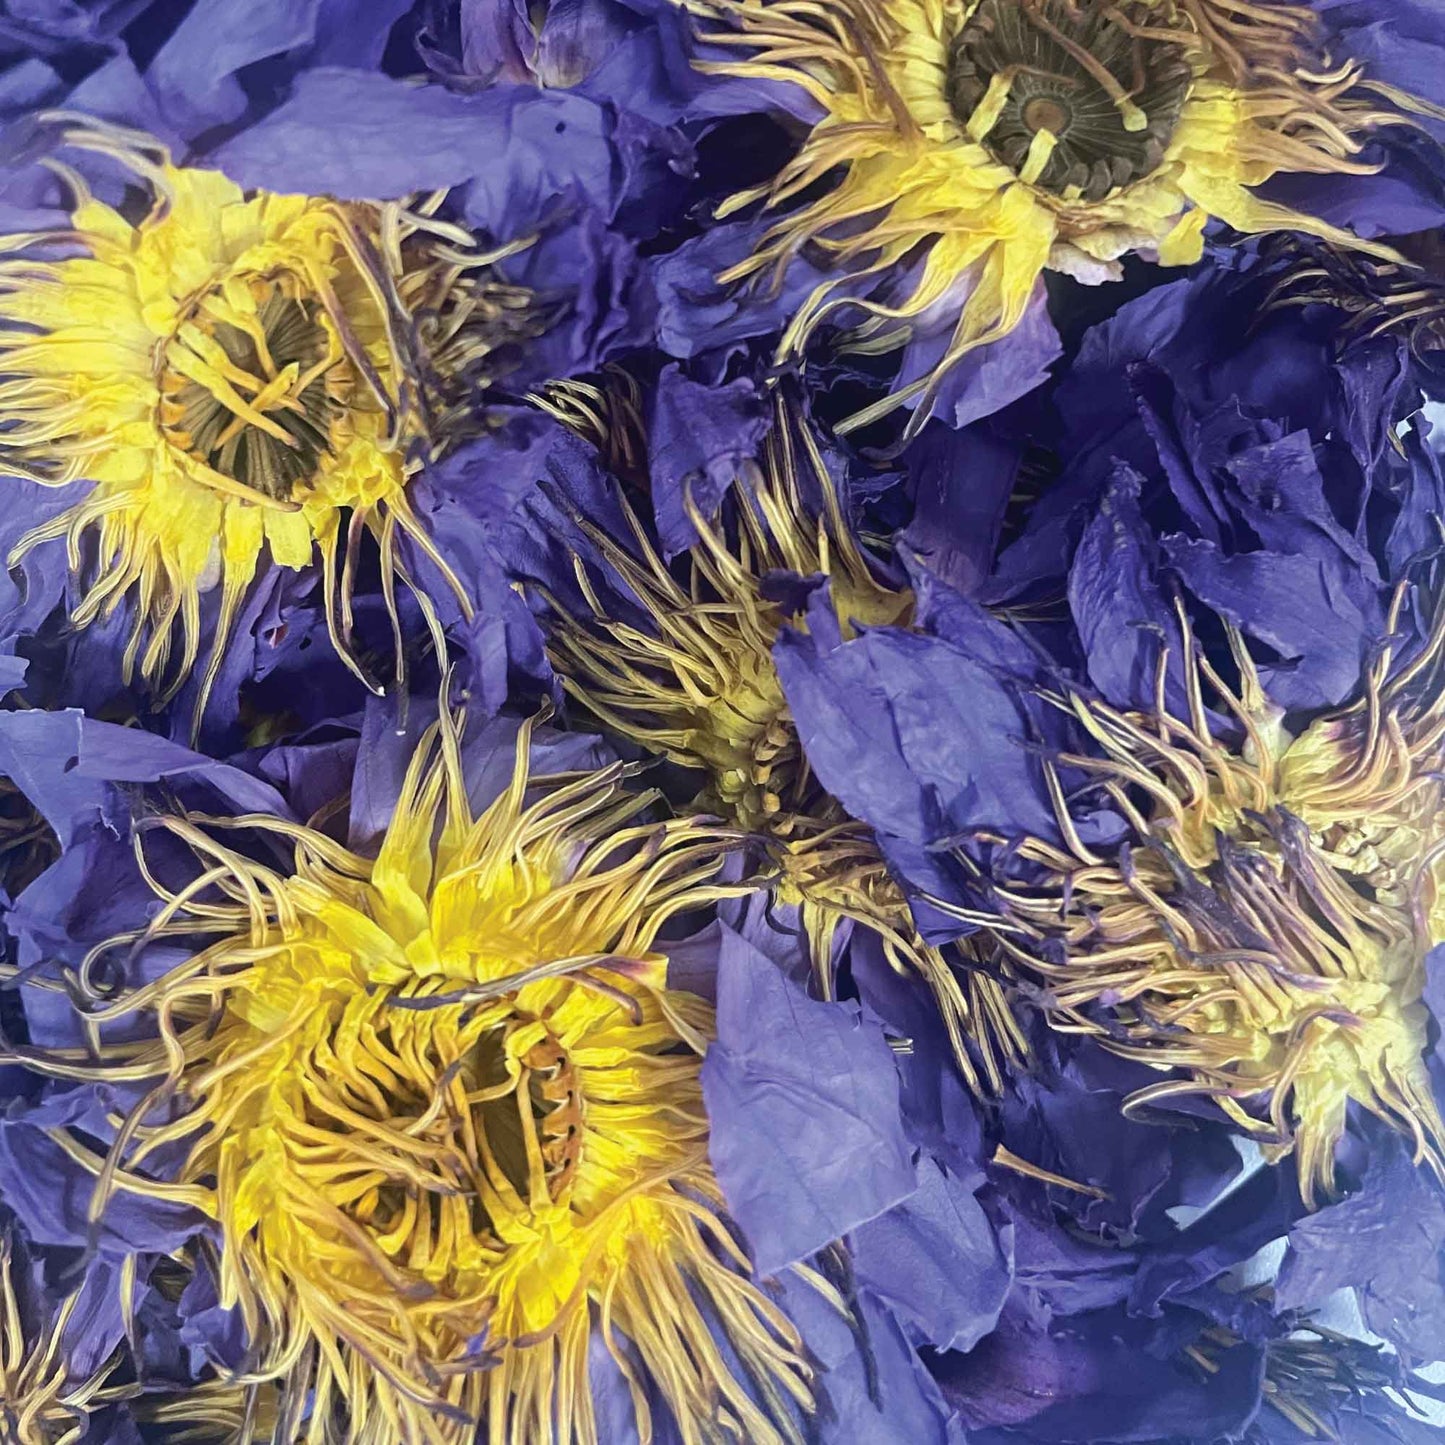 Orku 500g Dried Blue Lotus Flowers - Whole Open Lily Nymphaea Caerulea